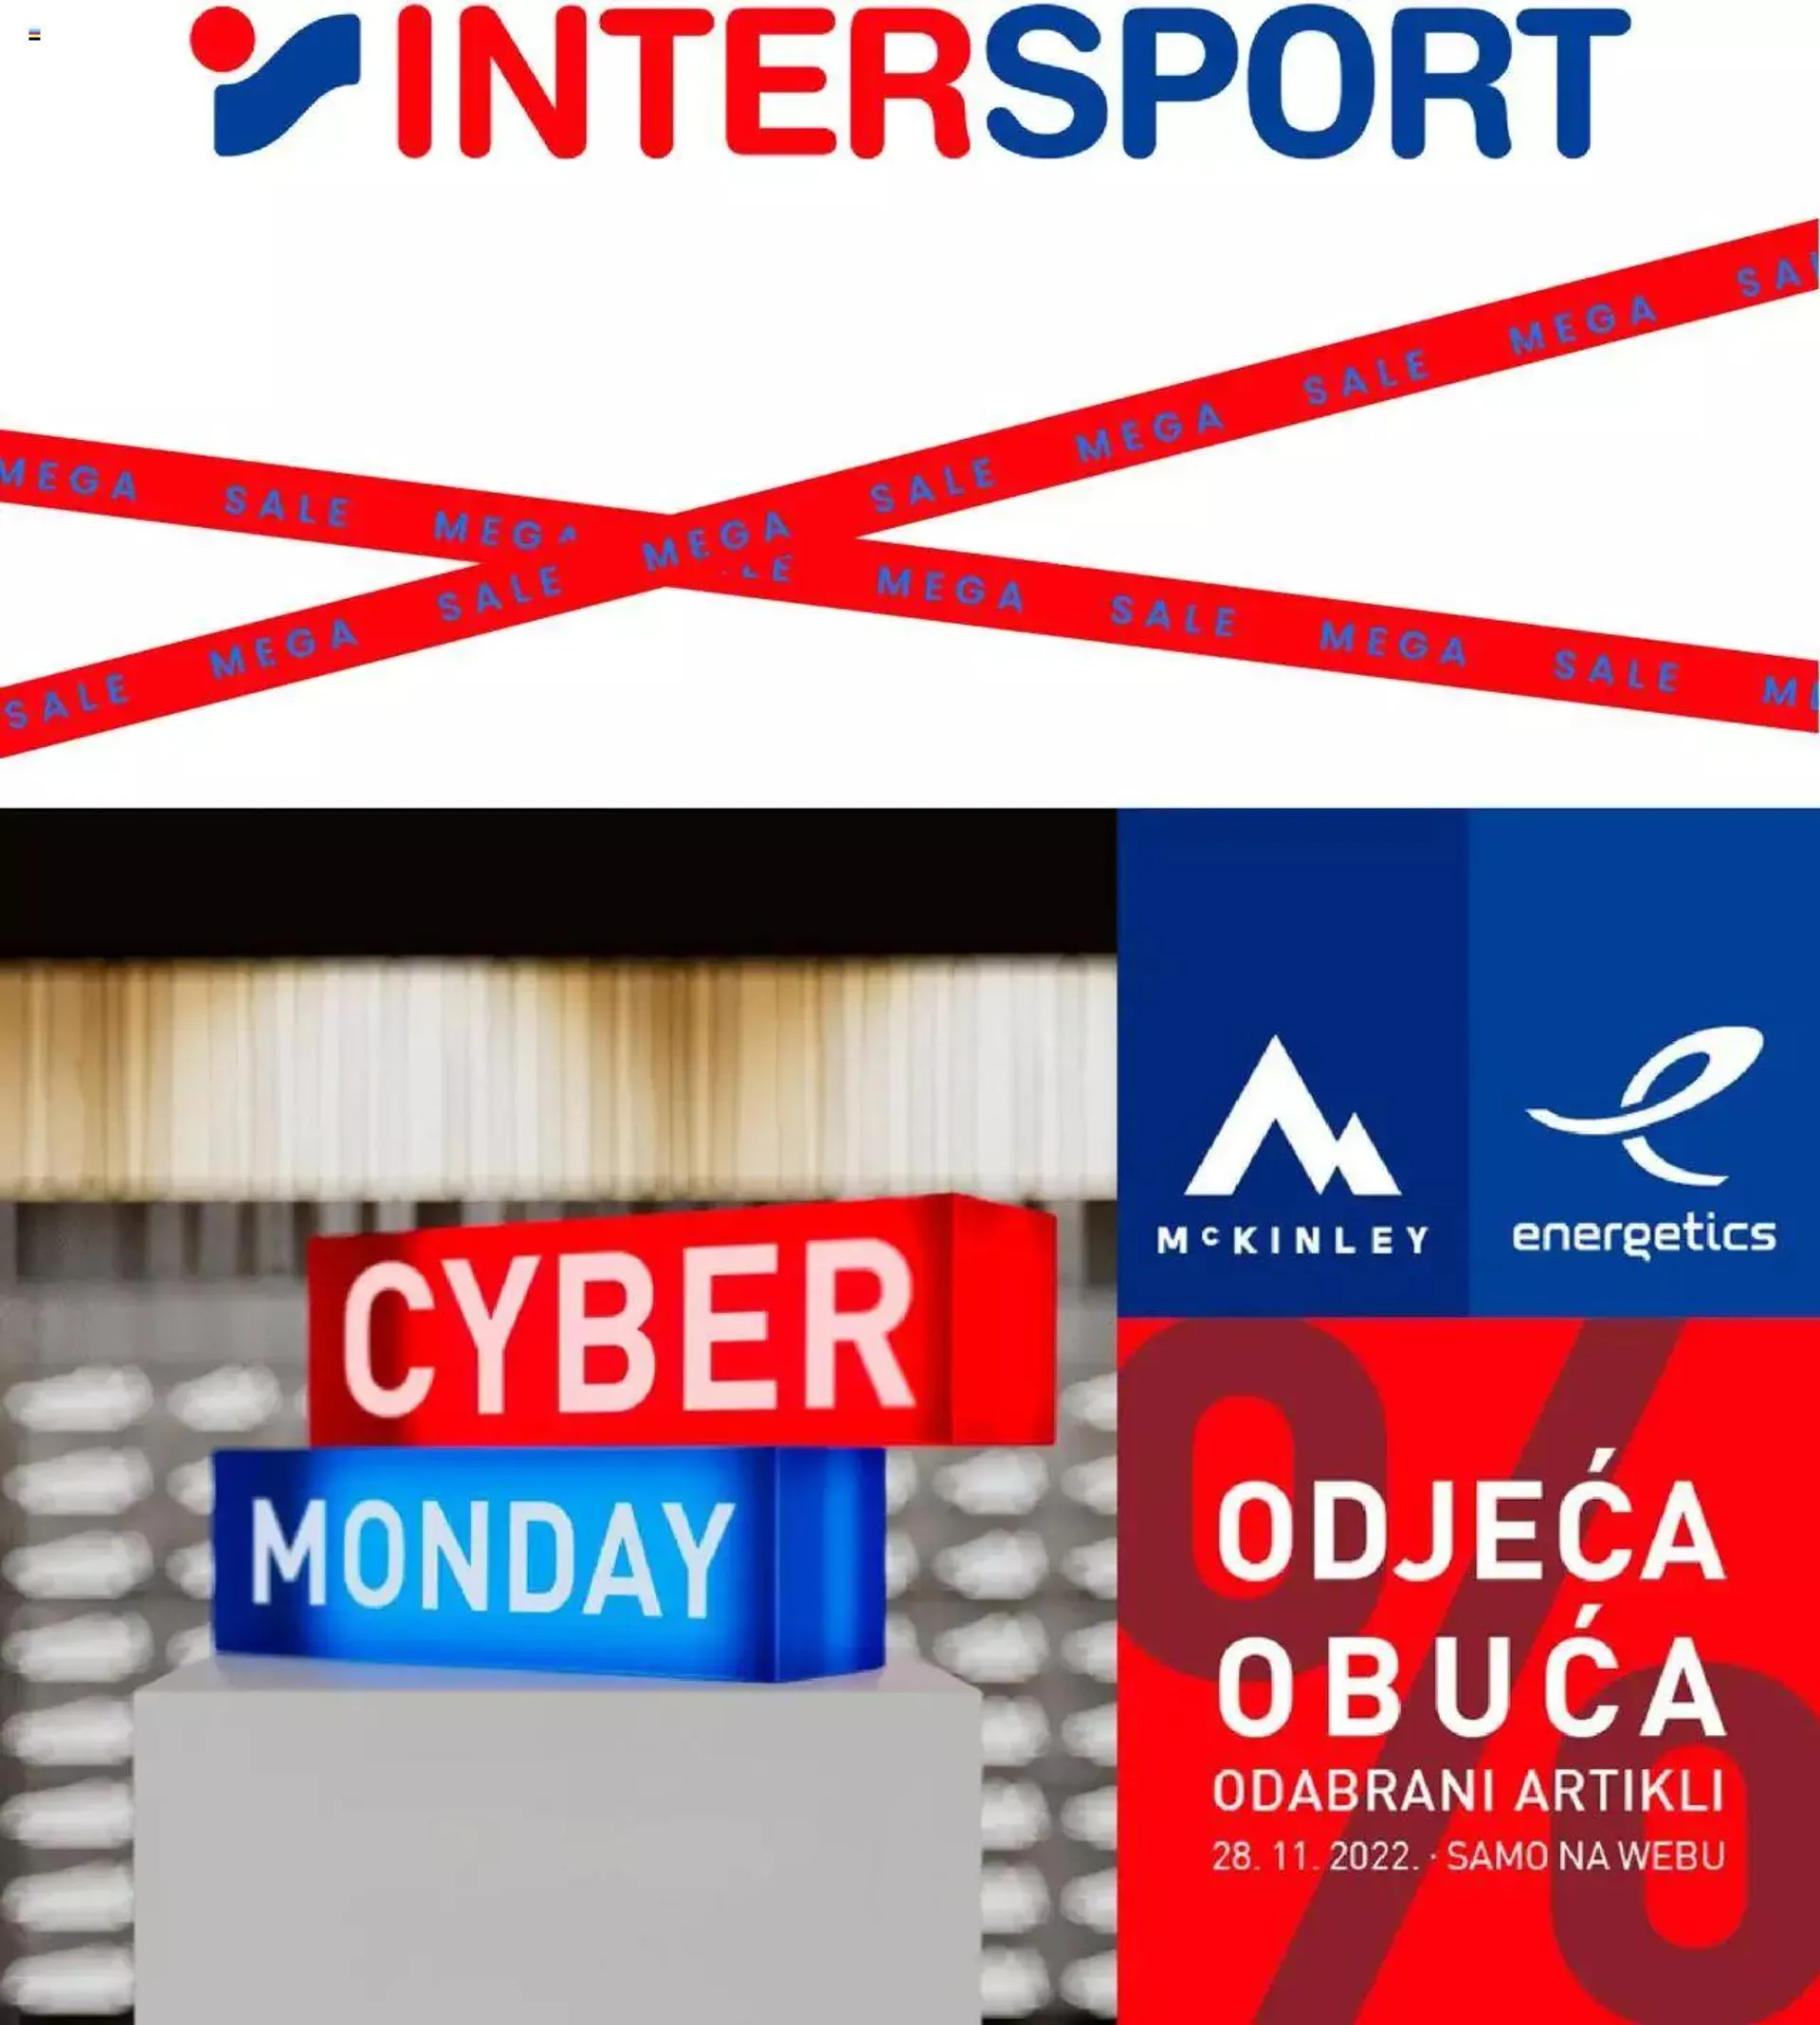 Intersport - Cyber Monday - 0